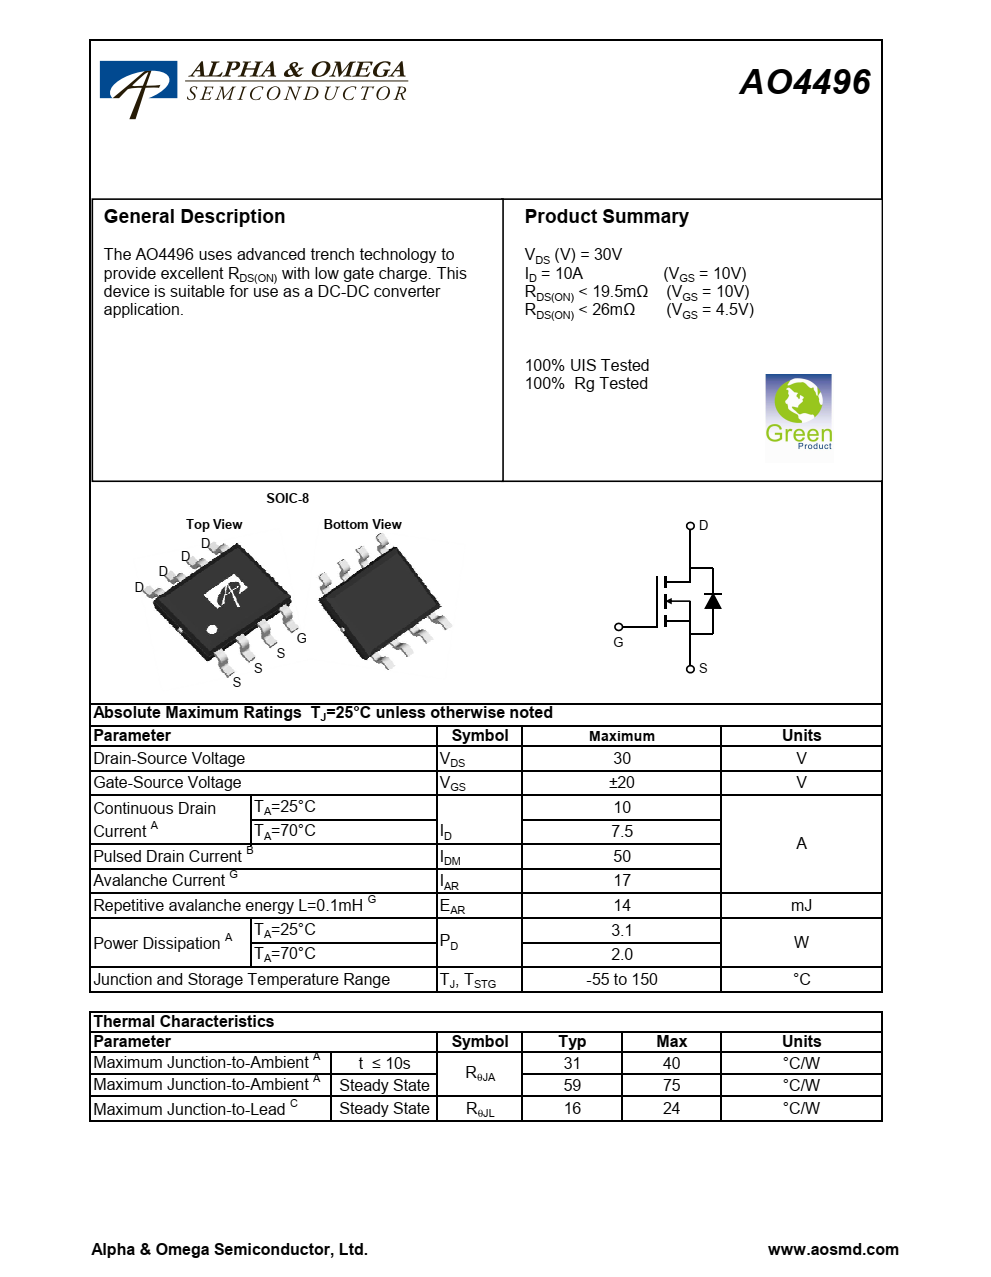 AO4496采用先进的沟槽技术  提供低栅极电荷的出色RDS（ON）